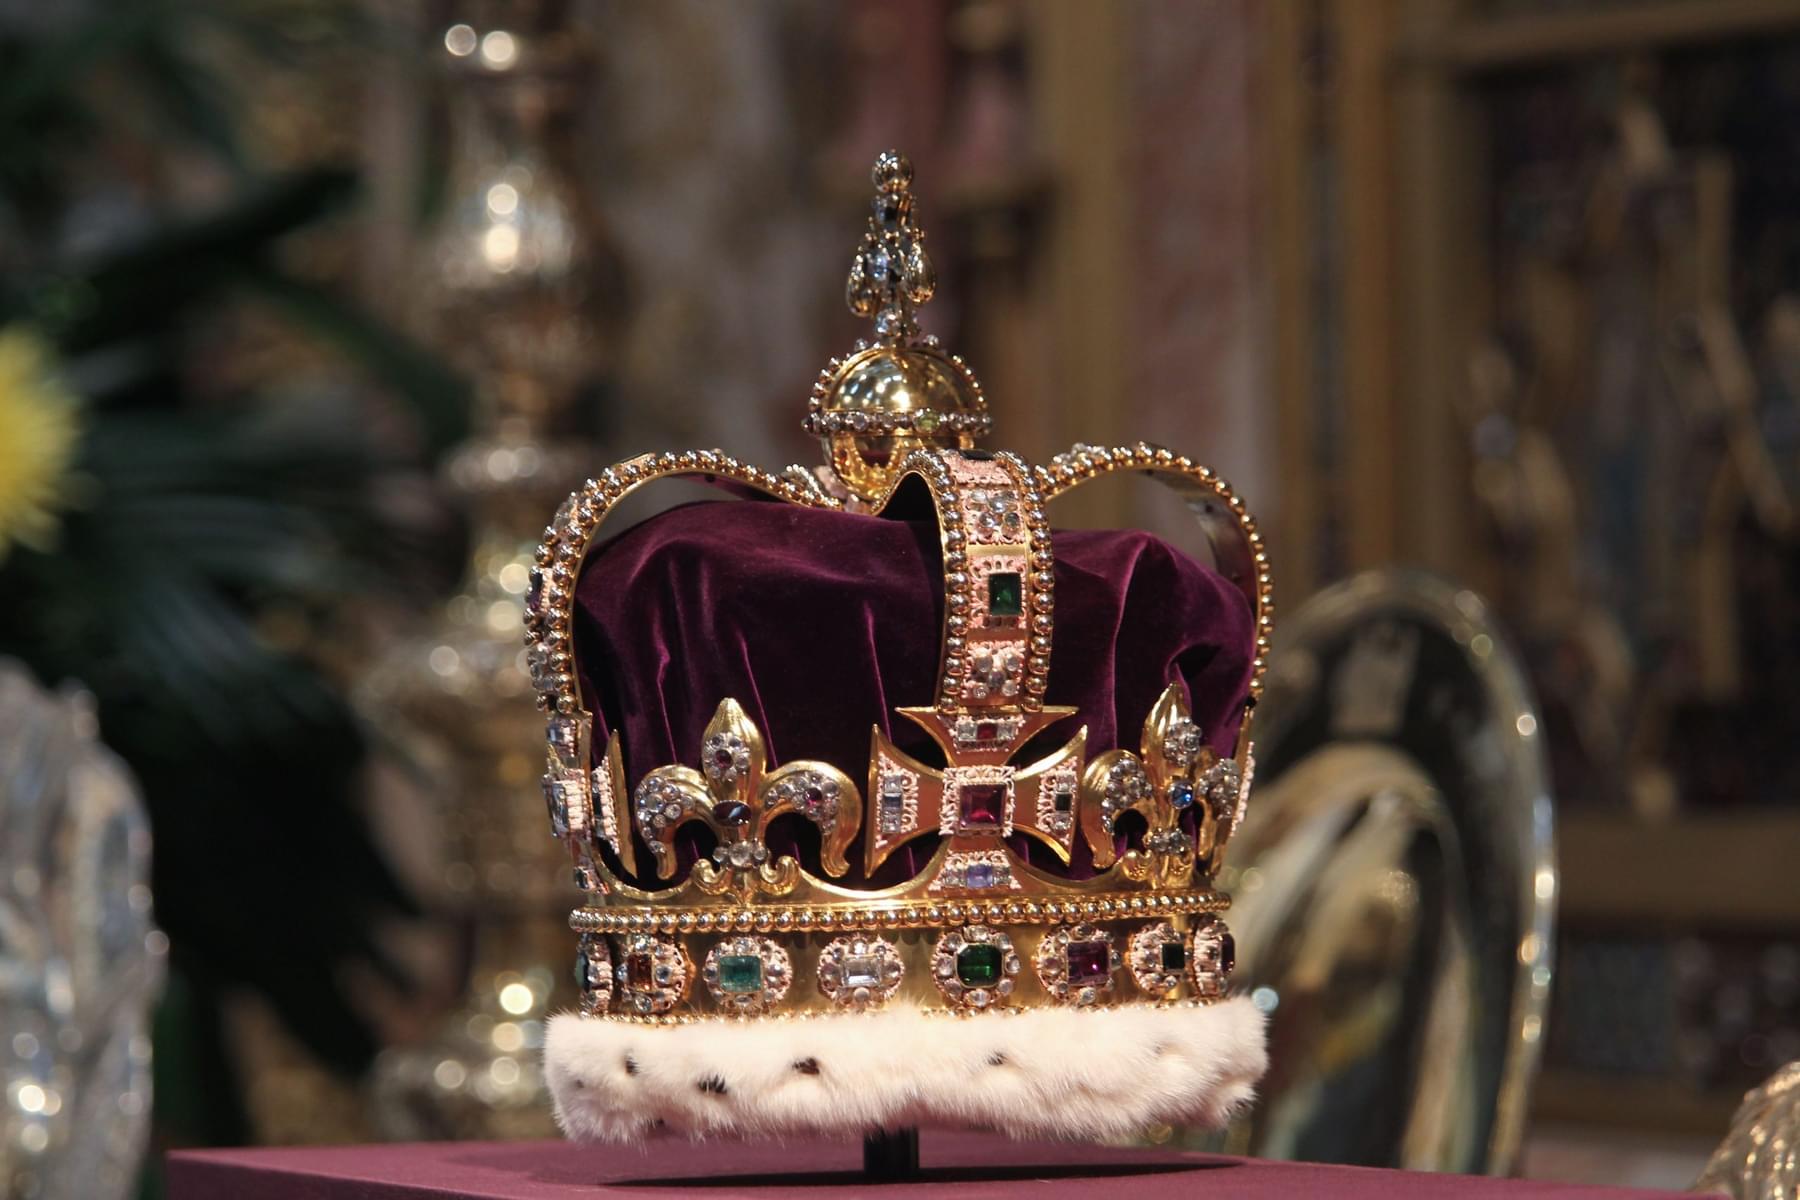 Admire the brilliance of St. Edward's Crown, a symbol of regal grandeur